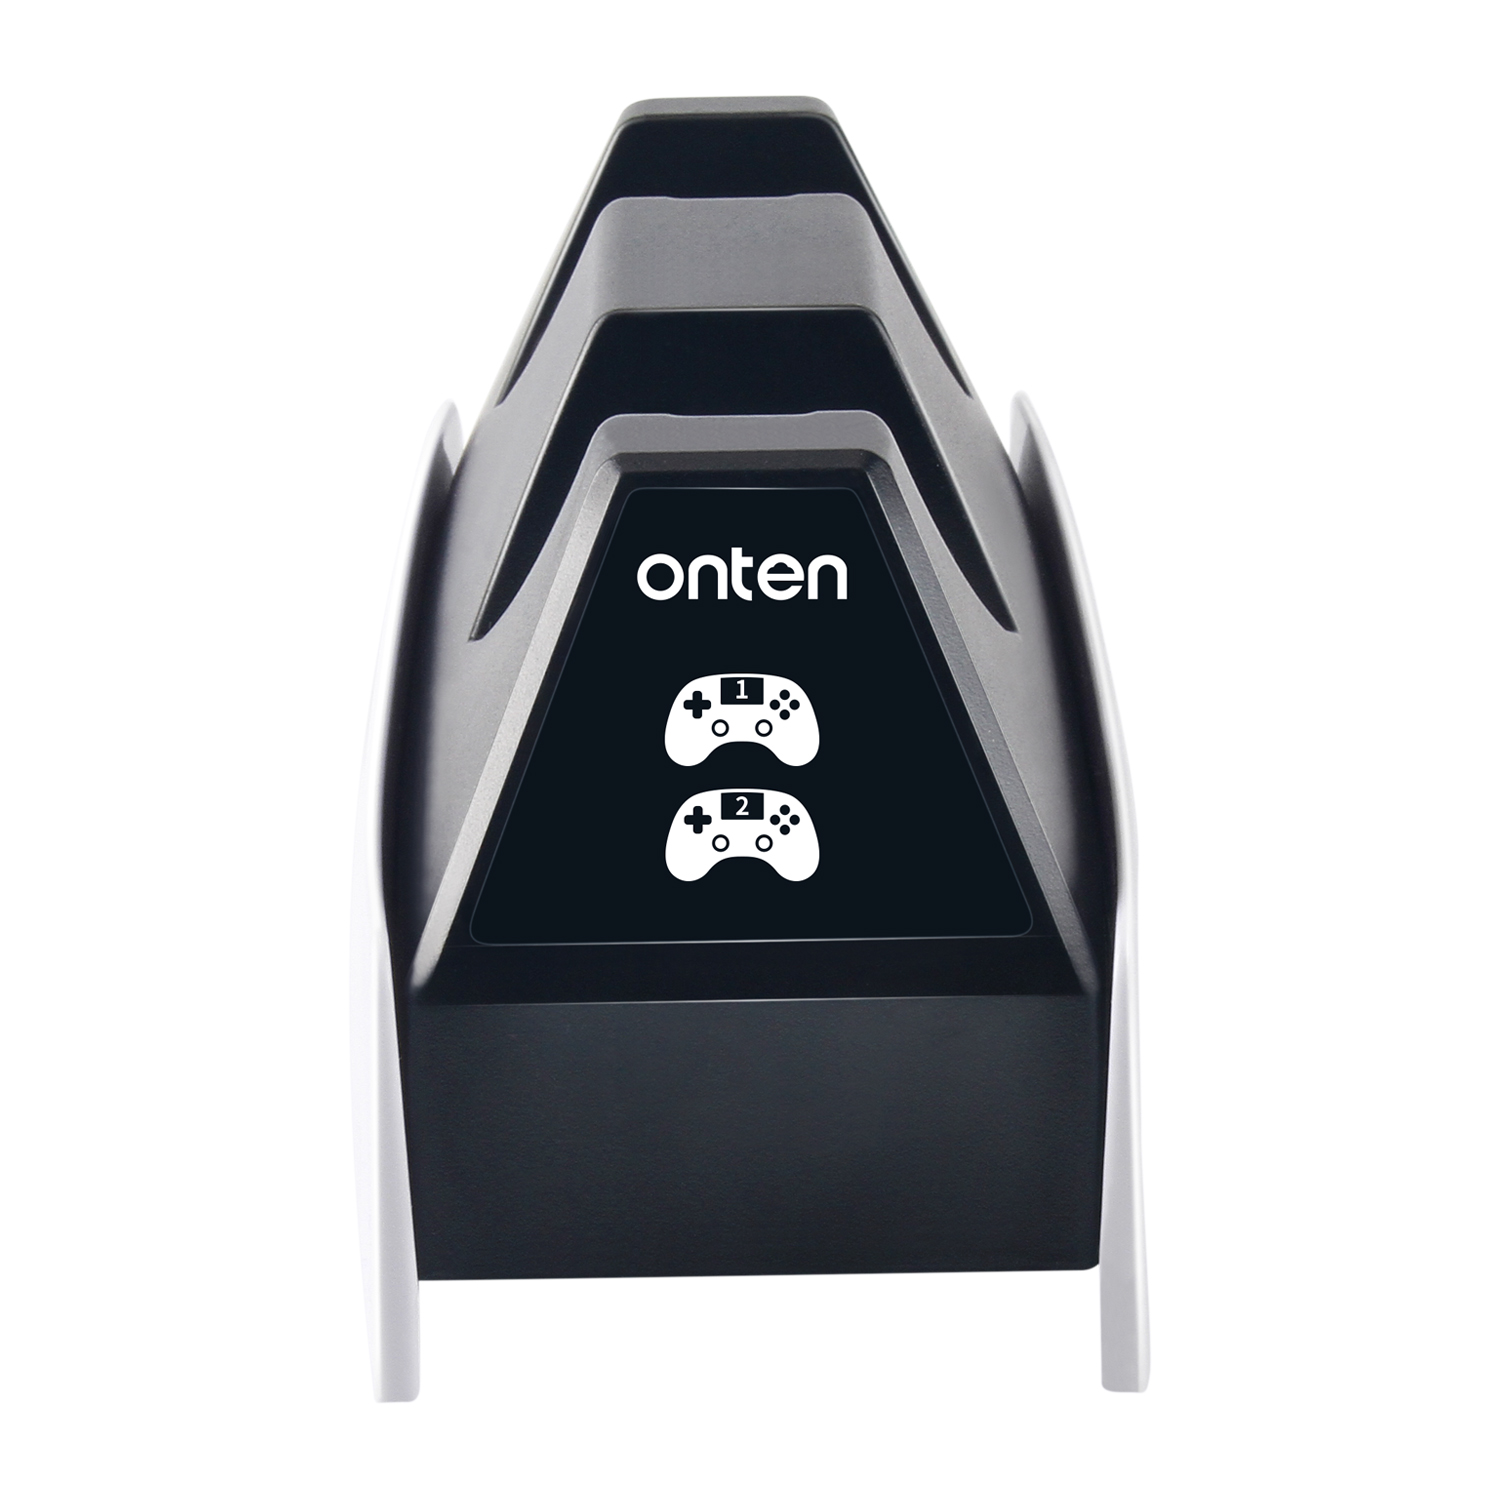 پایه شارژر دسته بازی پلی استیشن 5 اونتن مدل OTN-PS5